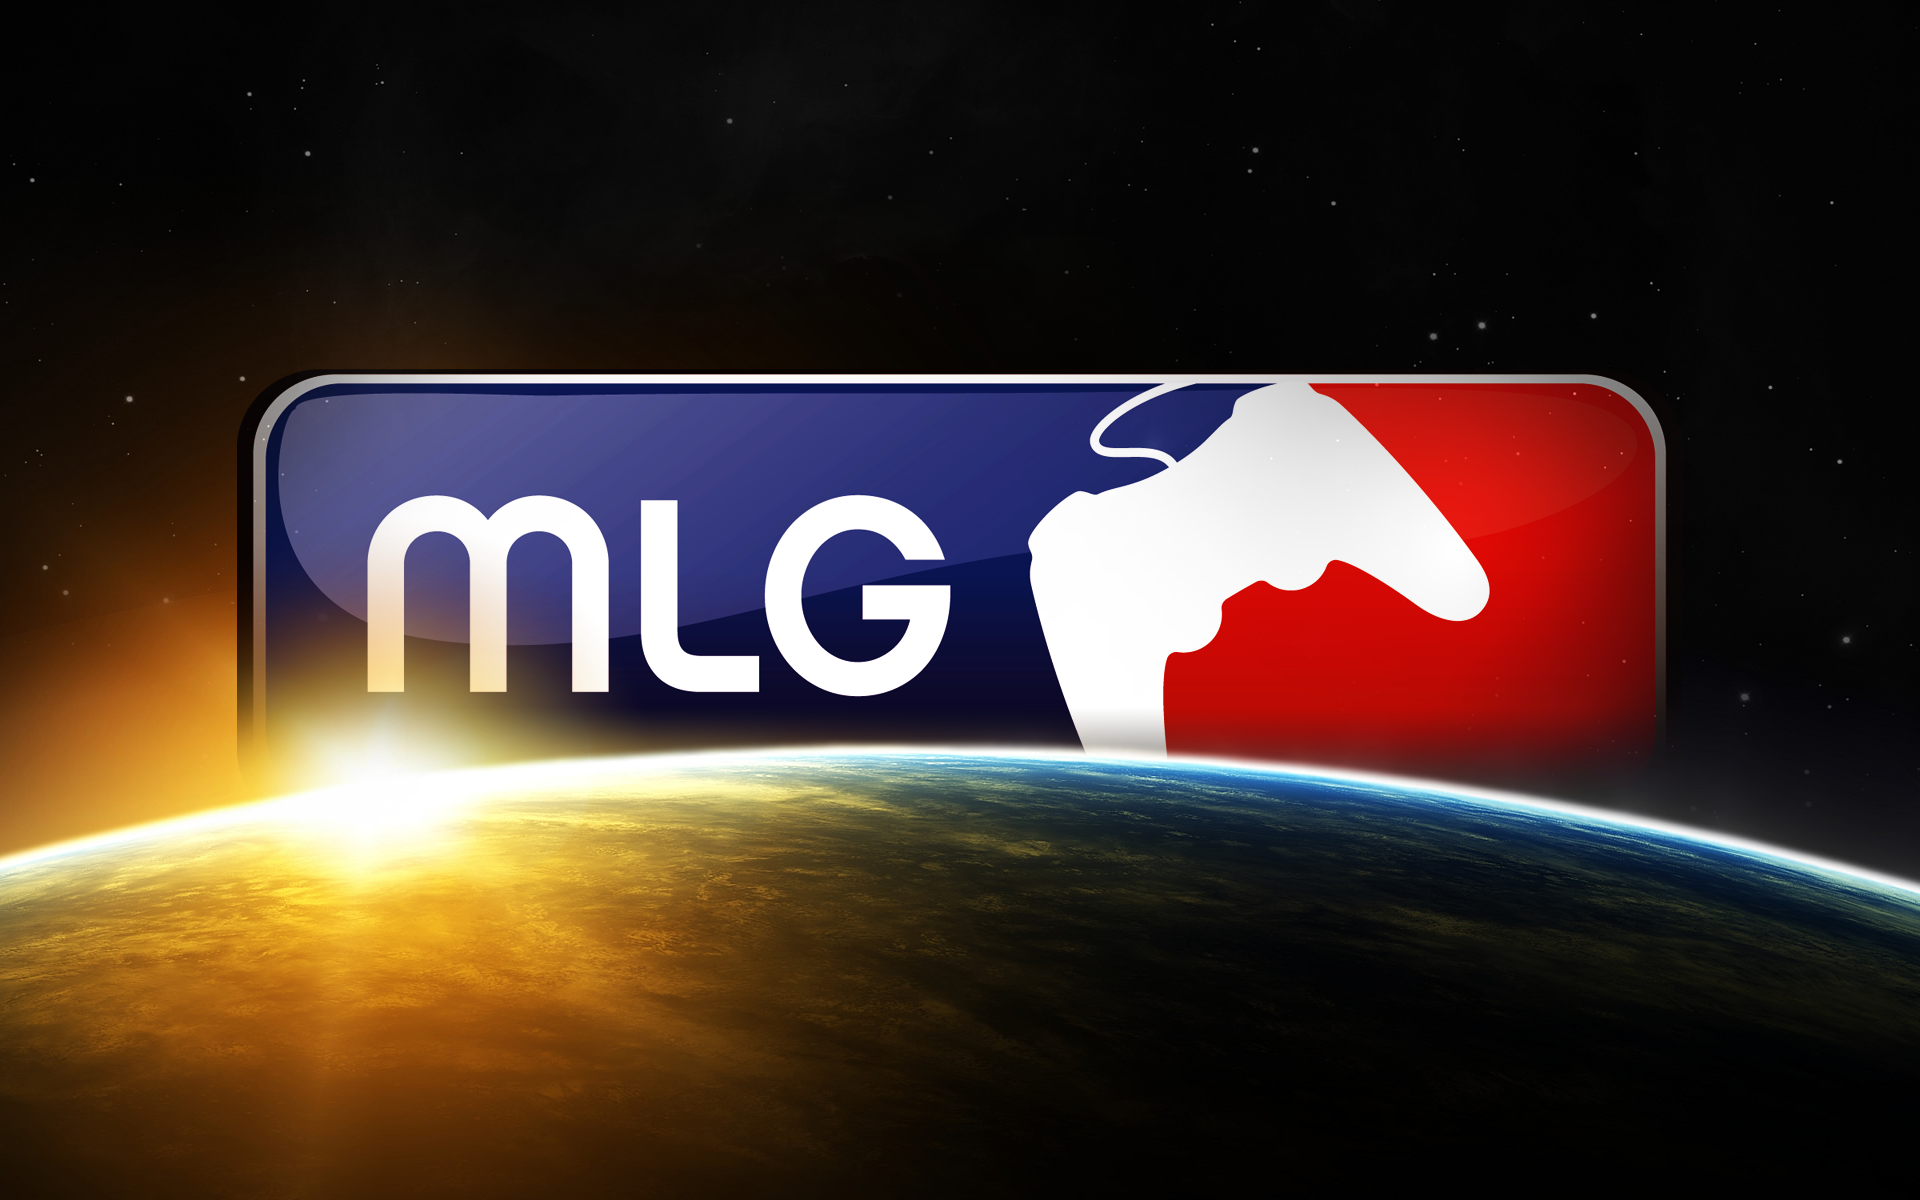 Major League Gaming Uping Online Programming Beginning The